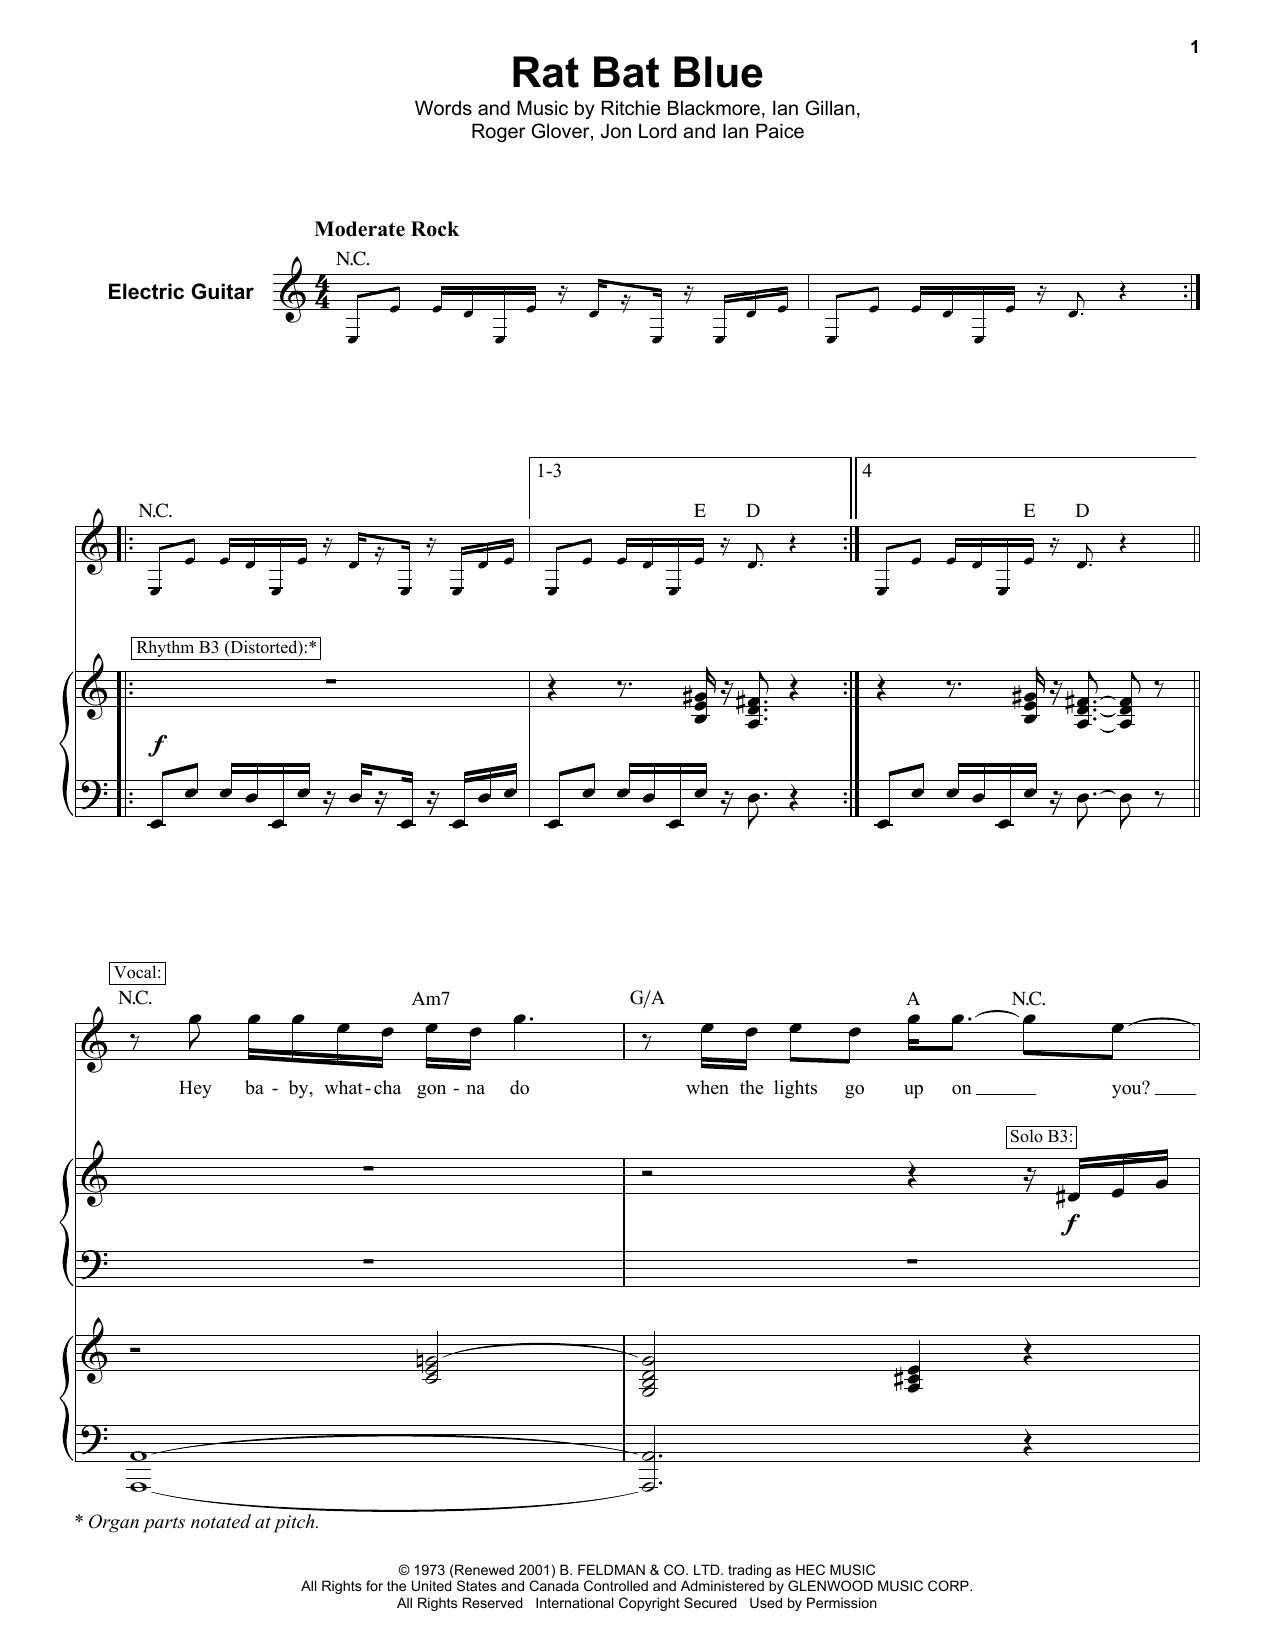 Deep Purple Rat Bat Blue Sheet Music Notes & Chords for Keyboard Transcription - Download or Print PDF